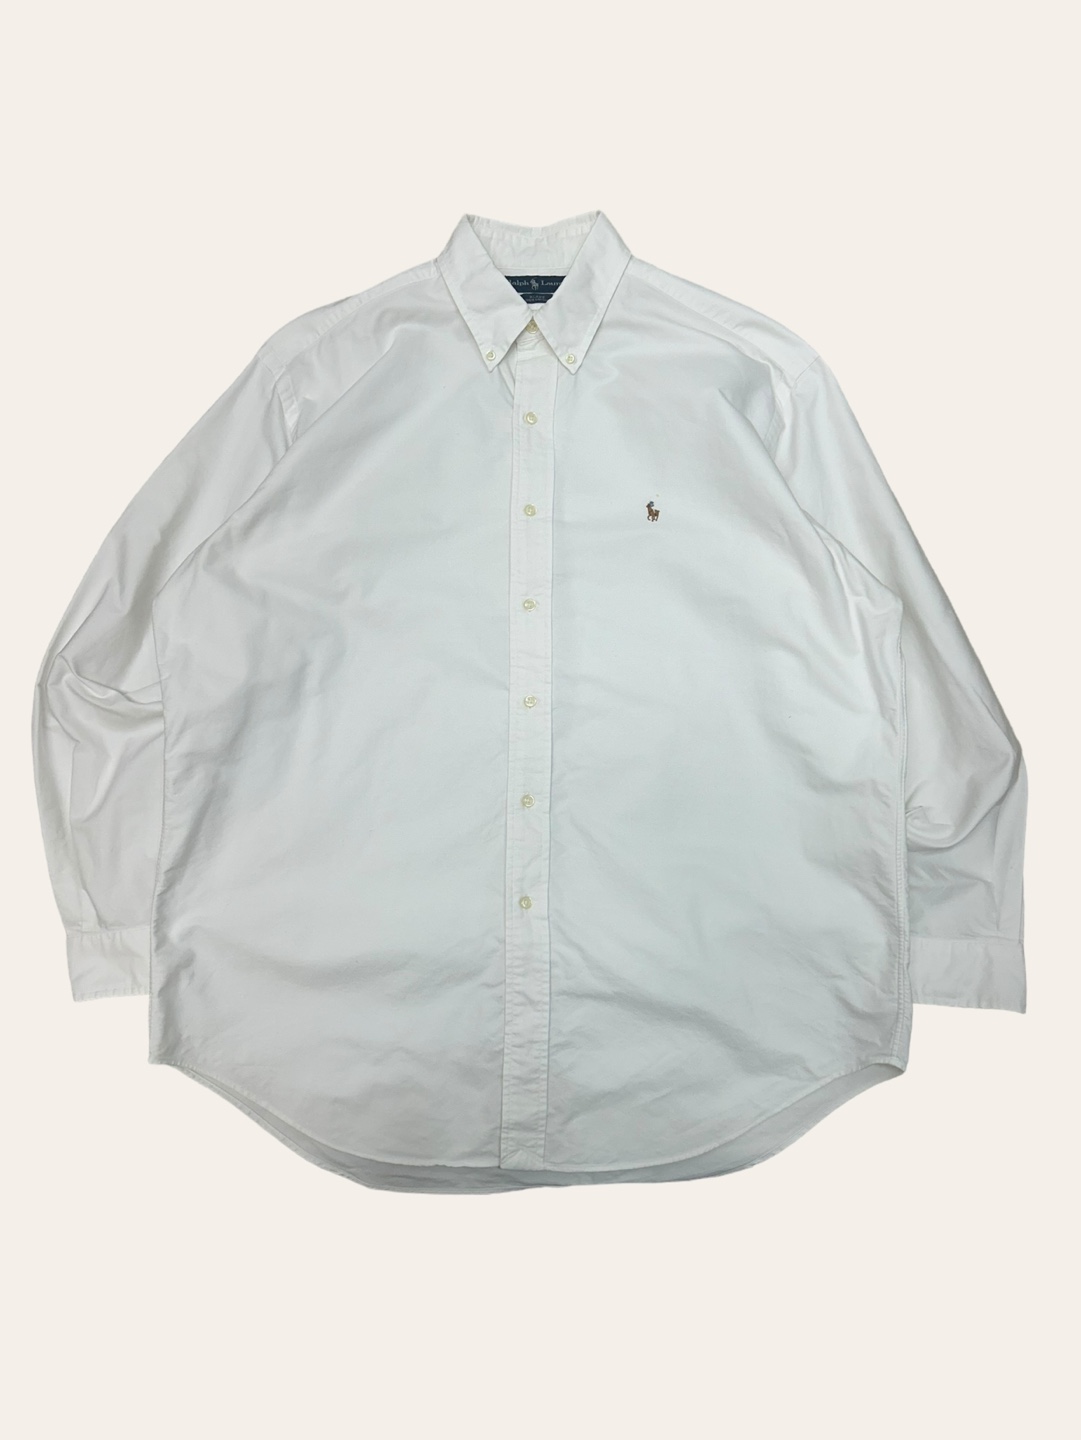 Polo ralph lauren white oxford shirt L